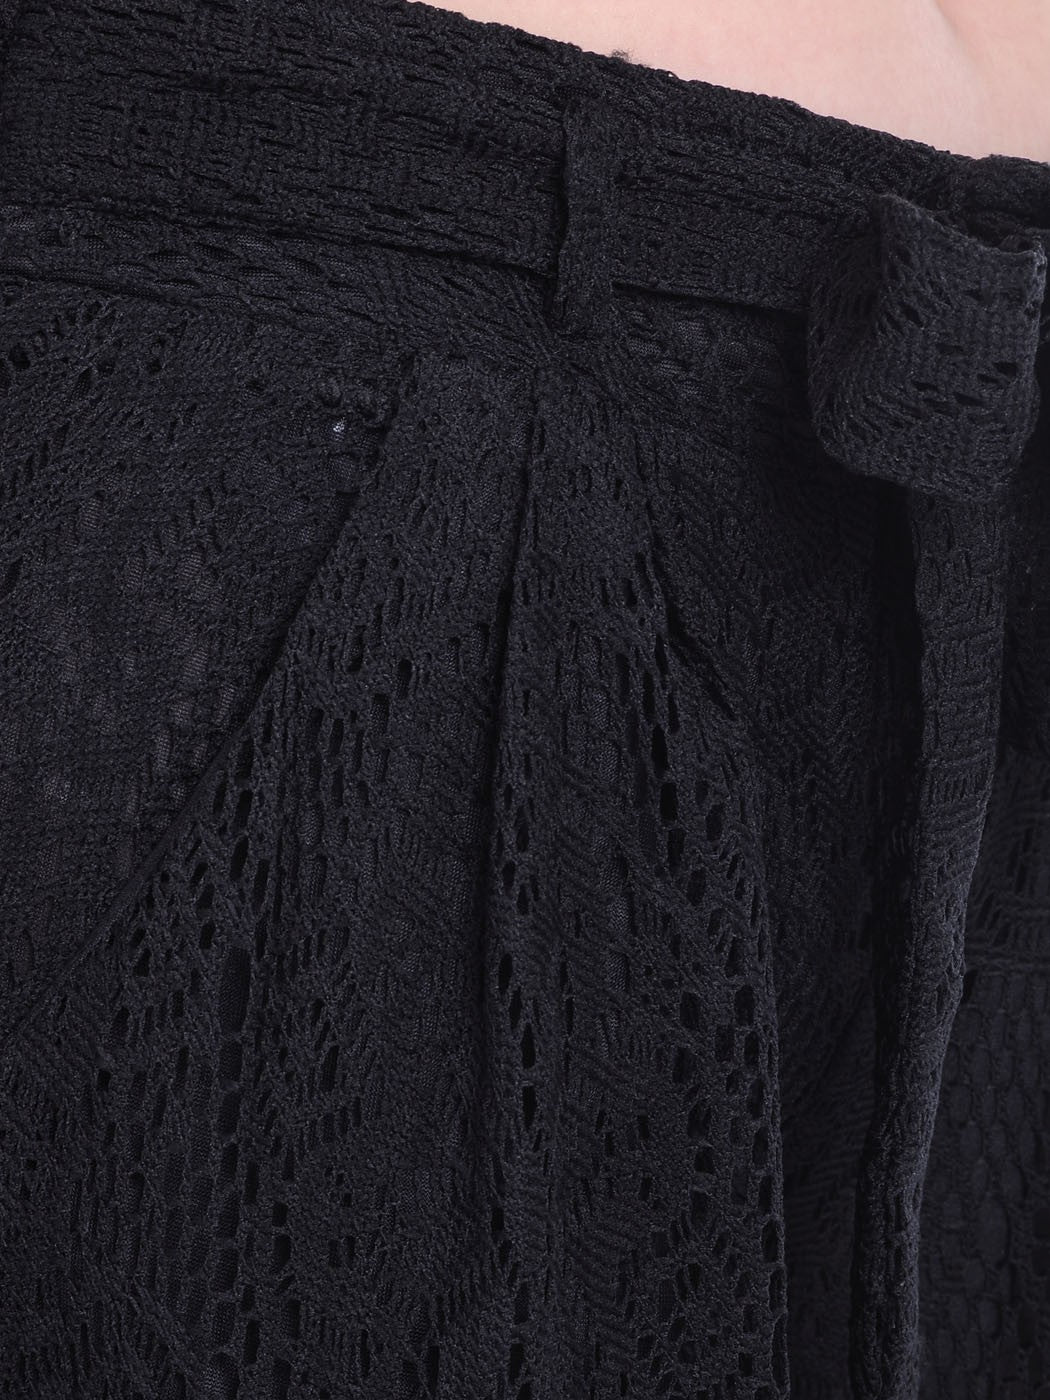 Anna-Kaci Womens Crochet Lace Boho Wide Leg High Waist Palazzo Trouser Pants